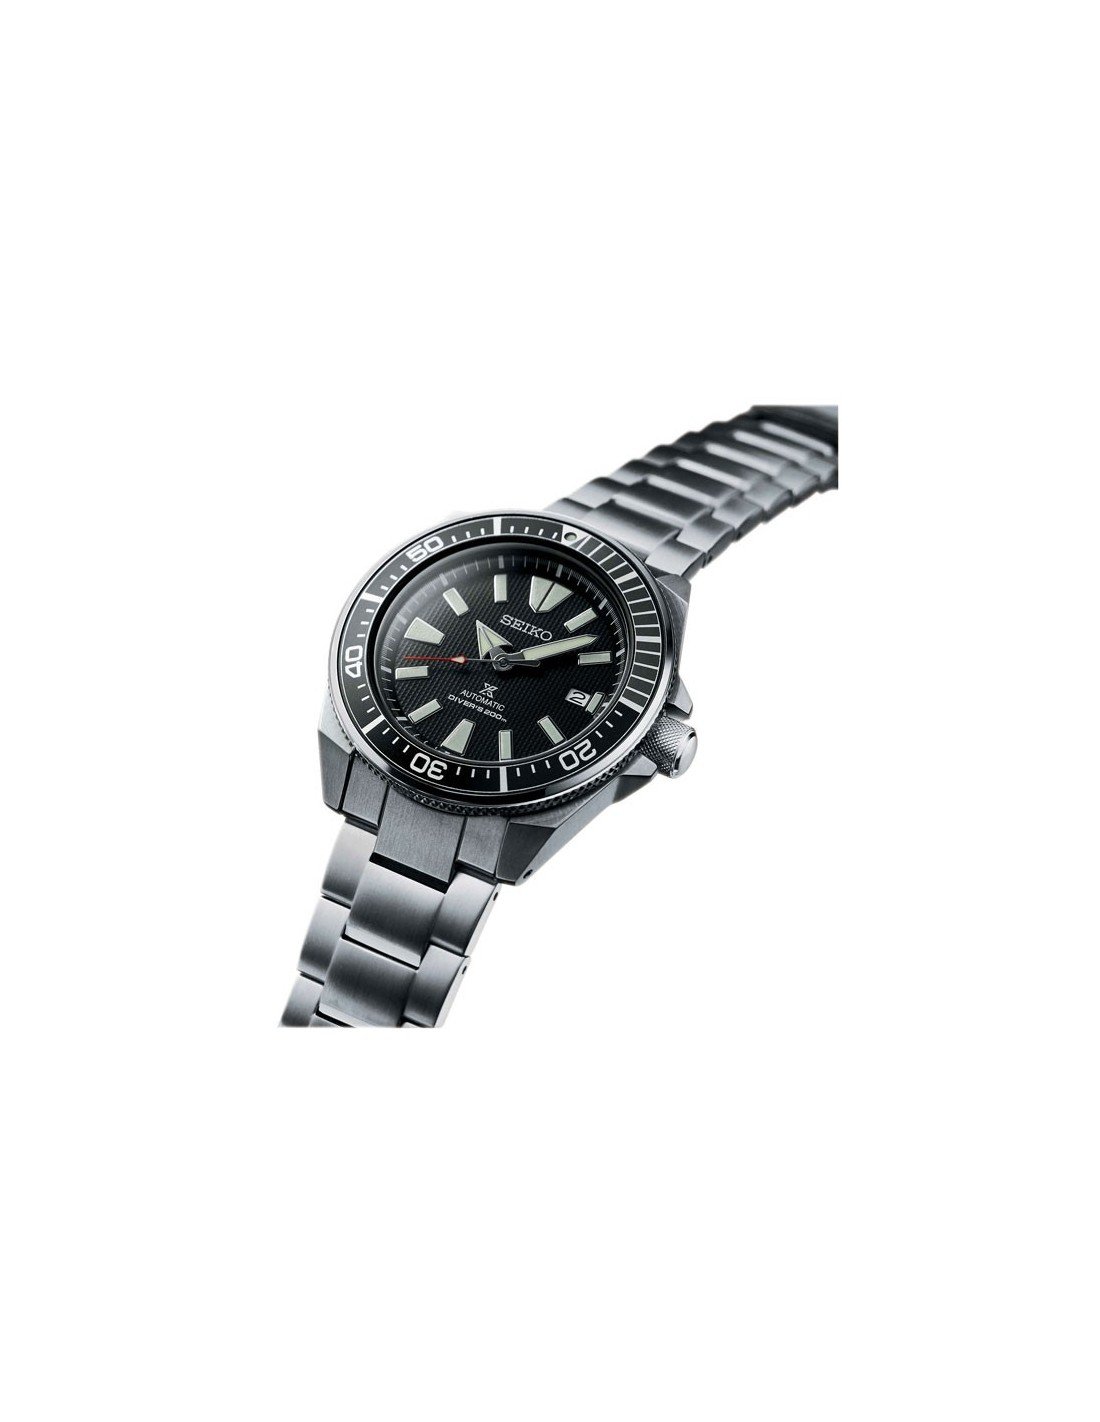 Seiko SRPB51K1 Prospex Automatic Diver Samurai Watch | SRPB51K1 |